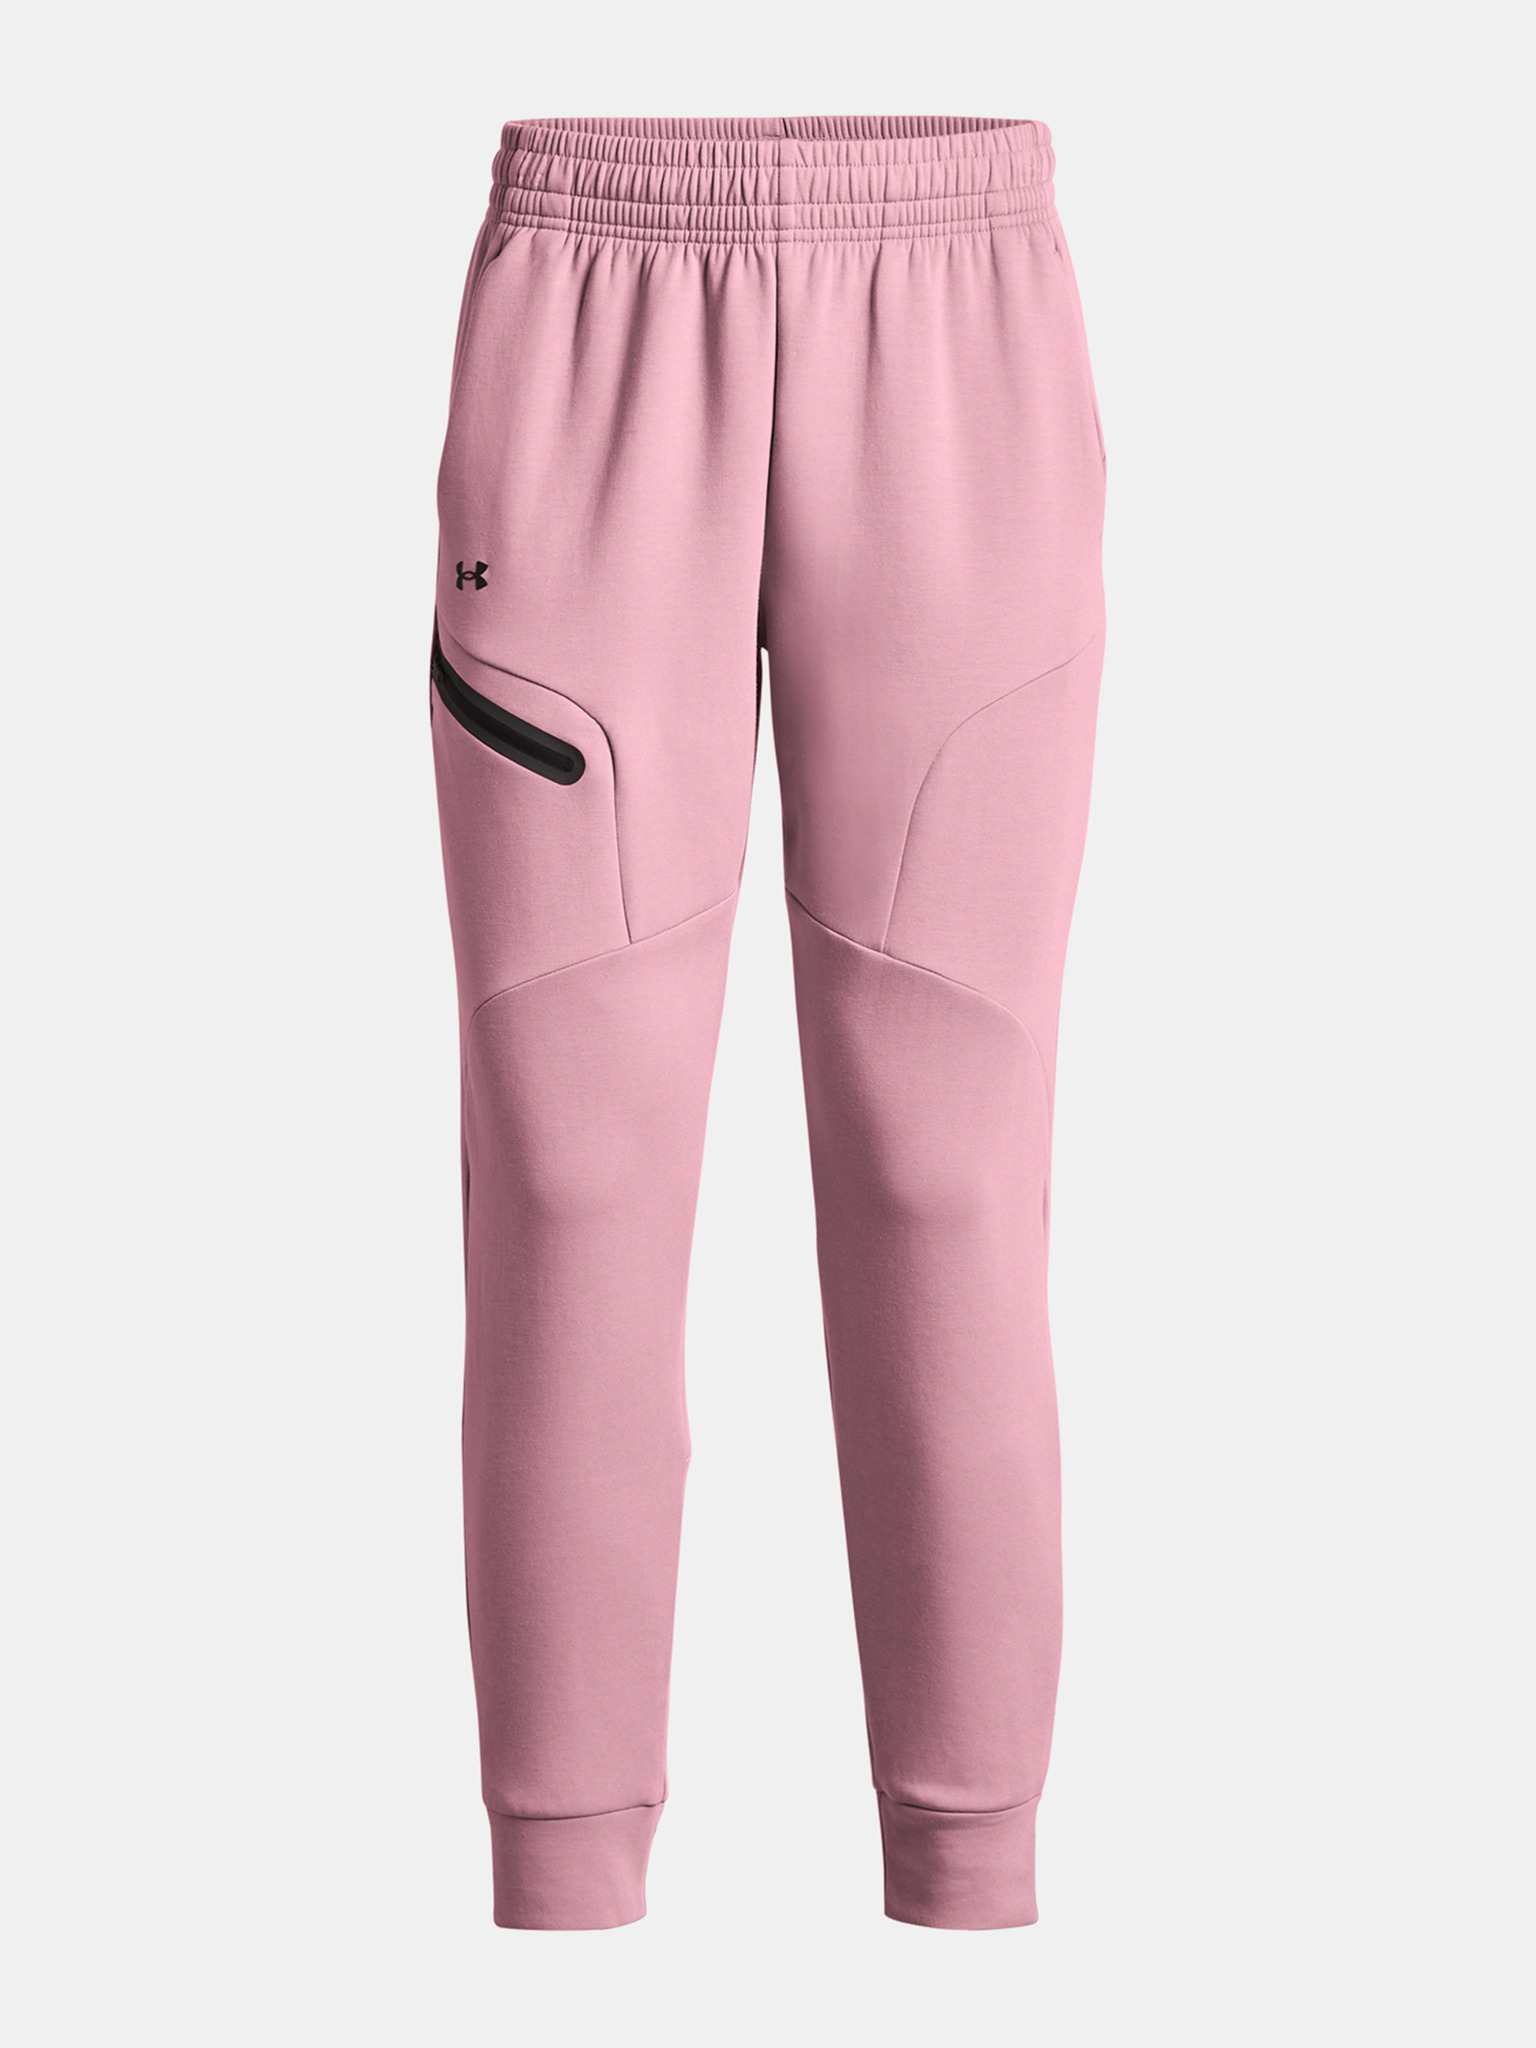 pink lululemon scuba joggers (sweatpants) size: - Depop